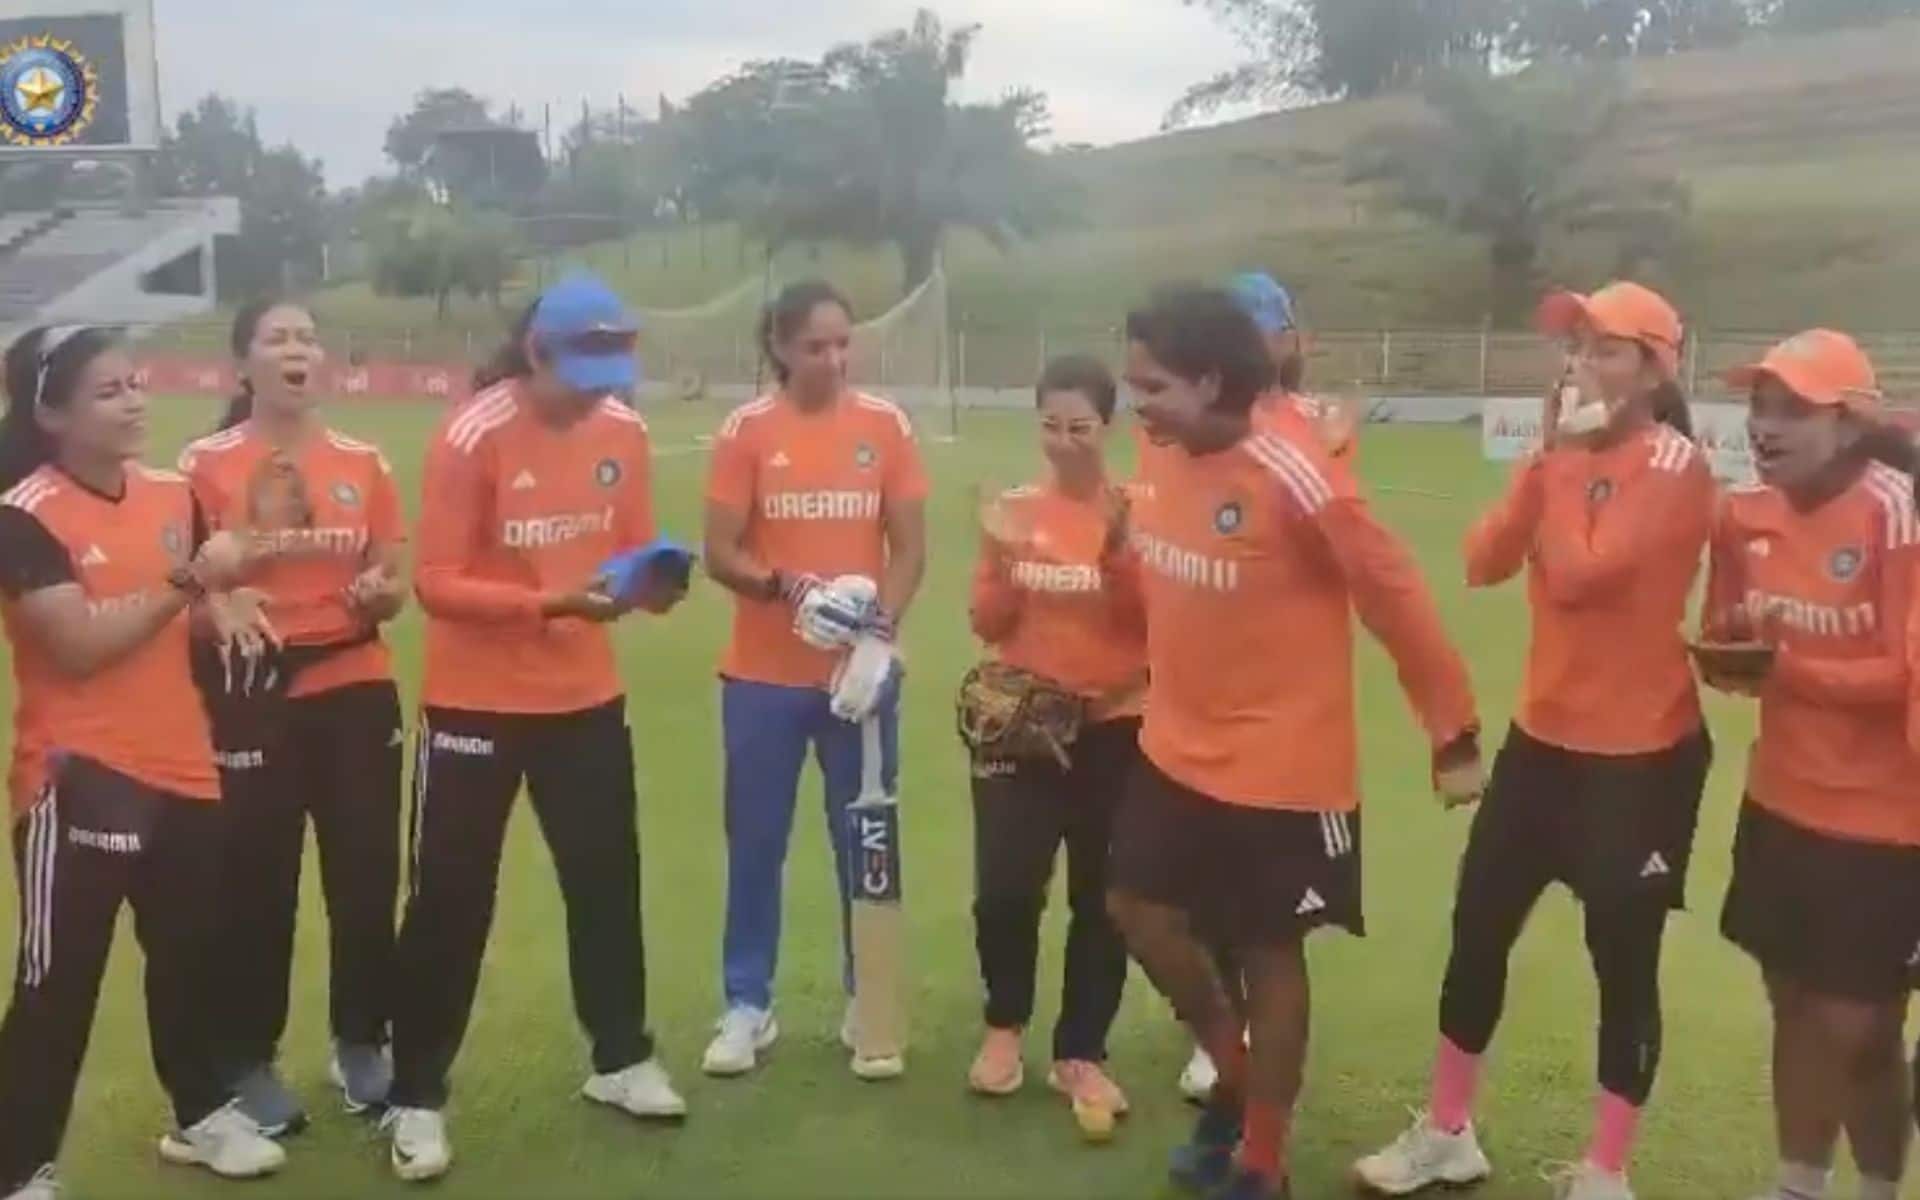 Asha Shobana getting her India cap from Mandhana (x.com)